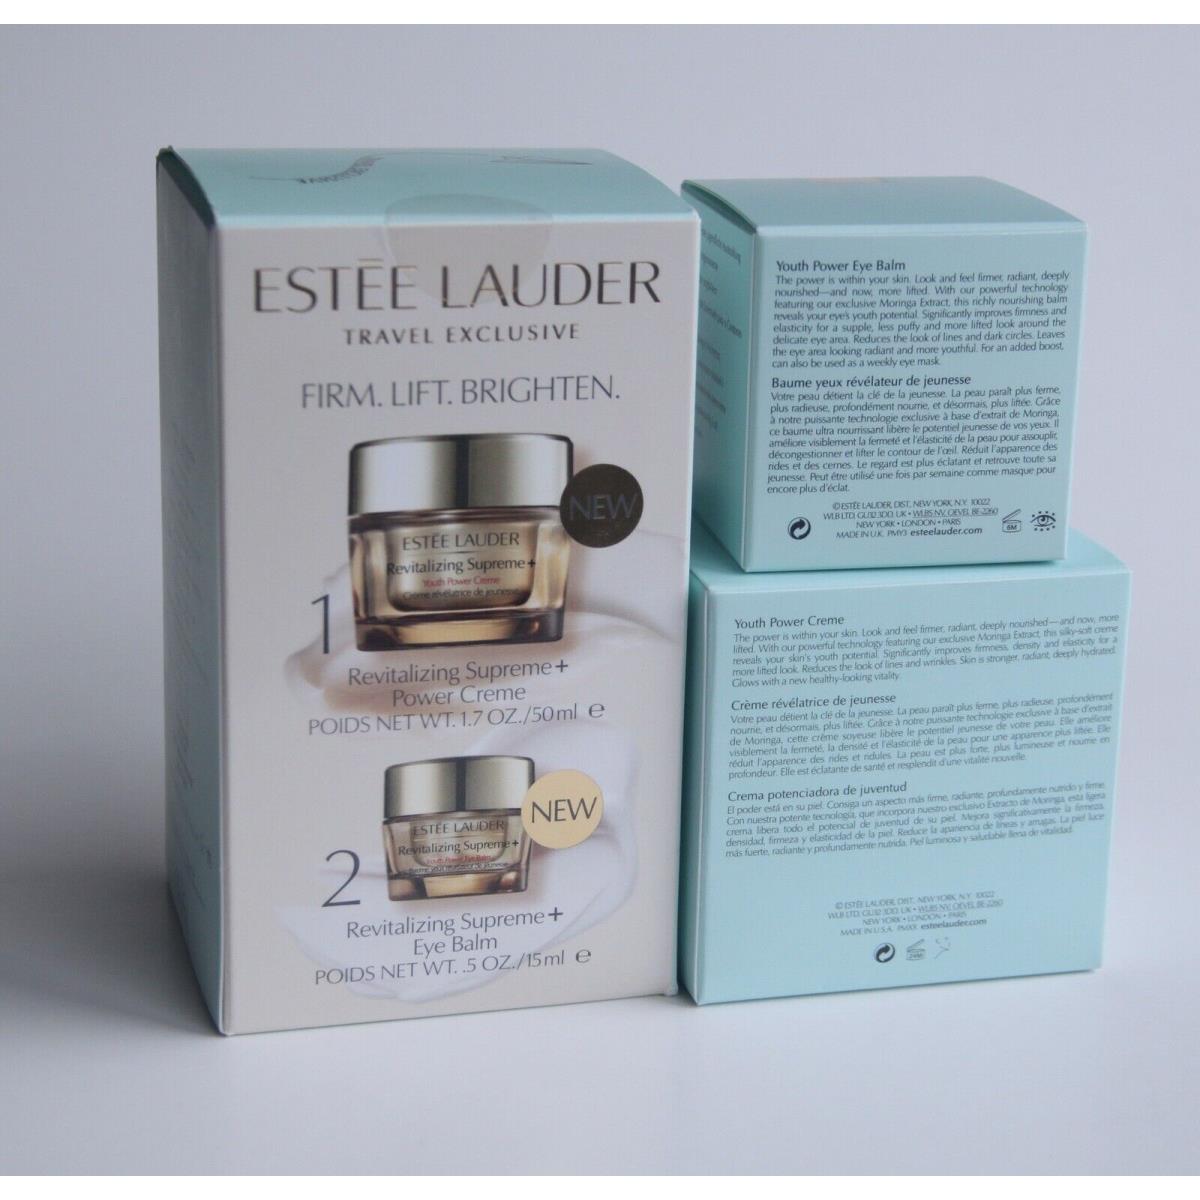 Estee Lauder Travel Exclusive Revitalizing Supreme+ Face Cream and Eye Balm Set